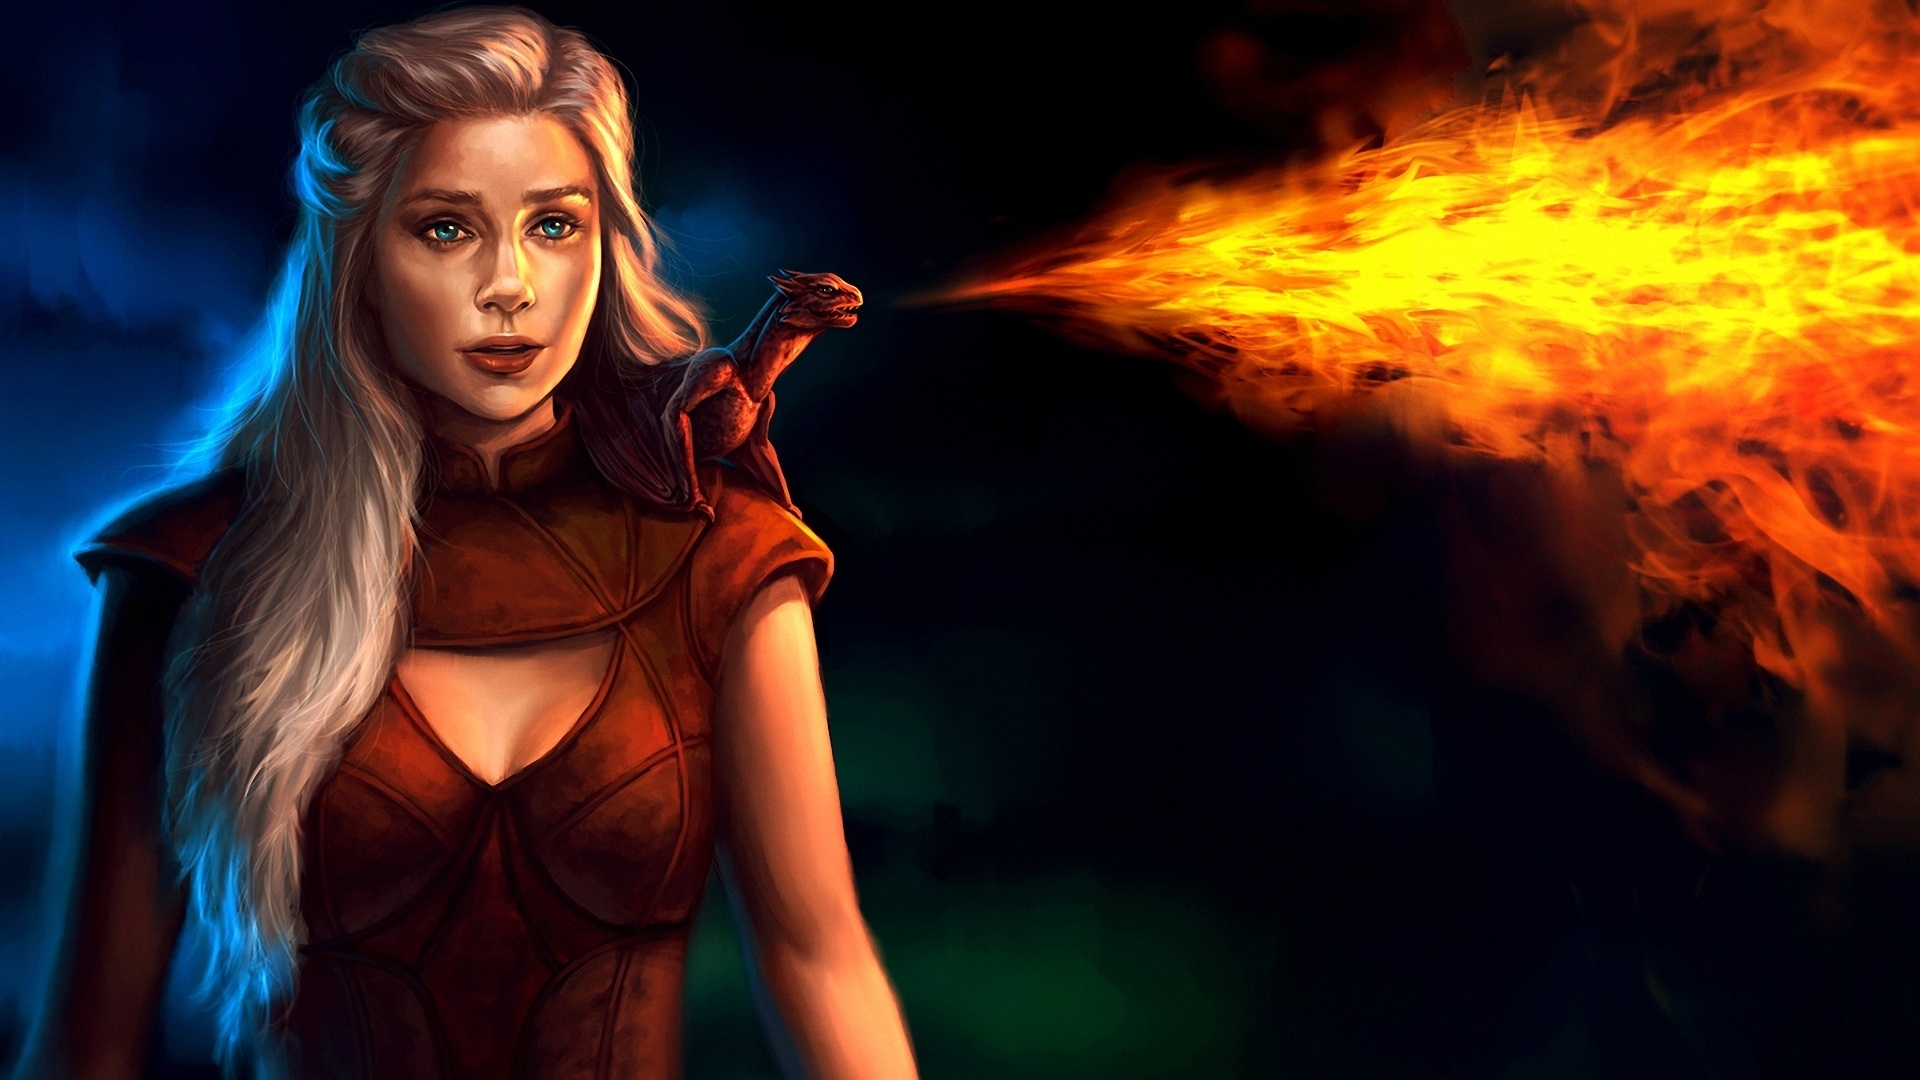 Fire Girl Fantasy Art - HD Wallpaper 